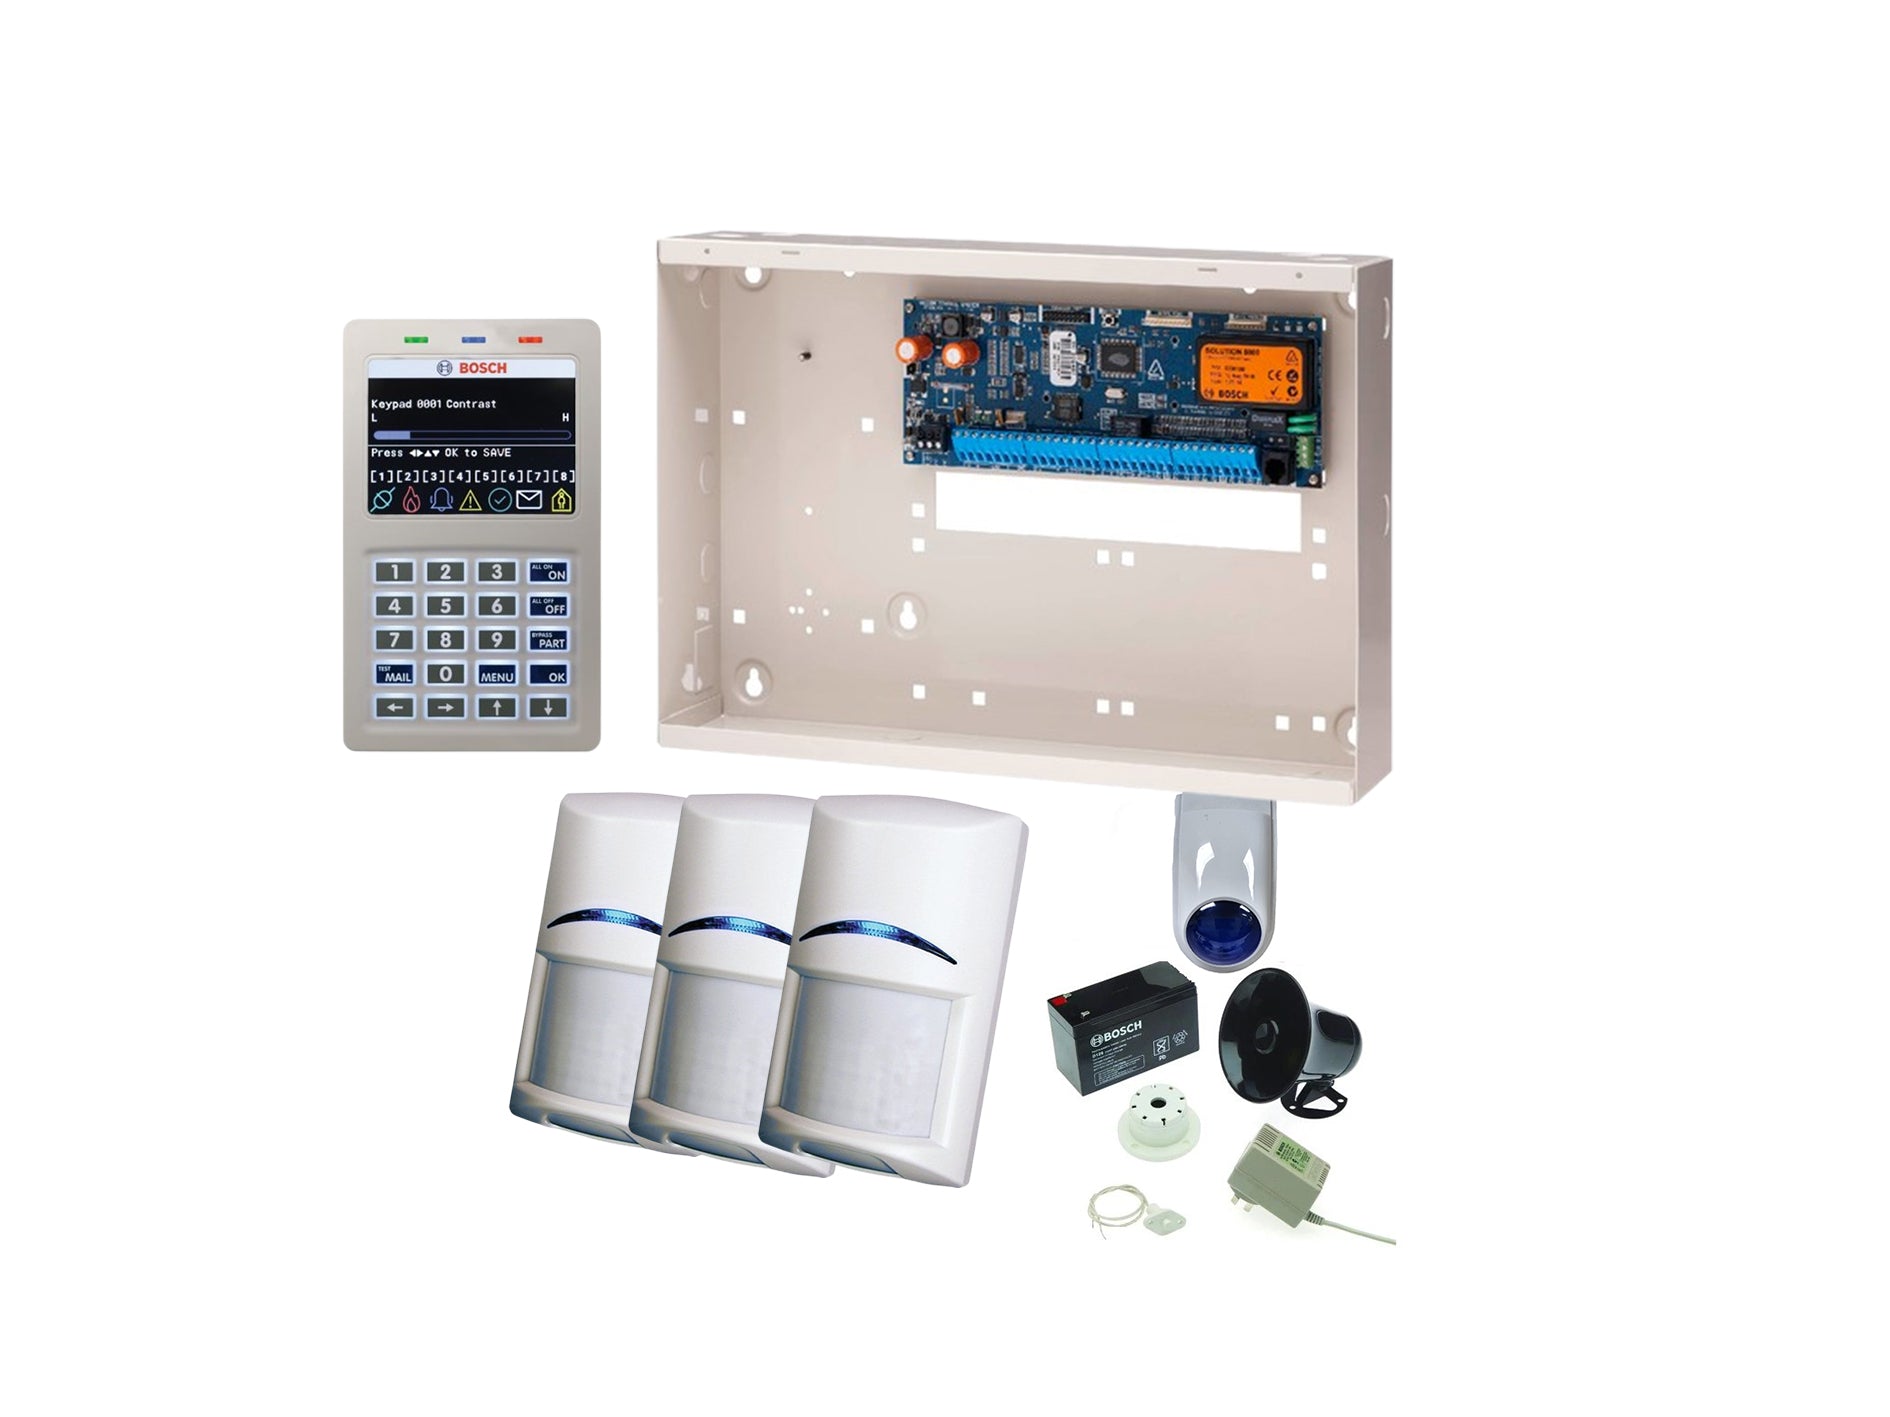 BOSCH, Solution 6000, Alarm kit, + CC610PB panel, CP736B WiFi Prox LCD keypad, 3x Tritech detectors + Accessories included